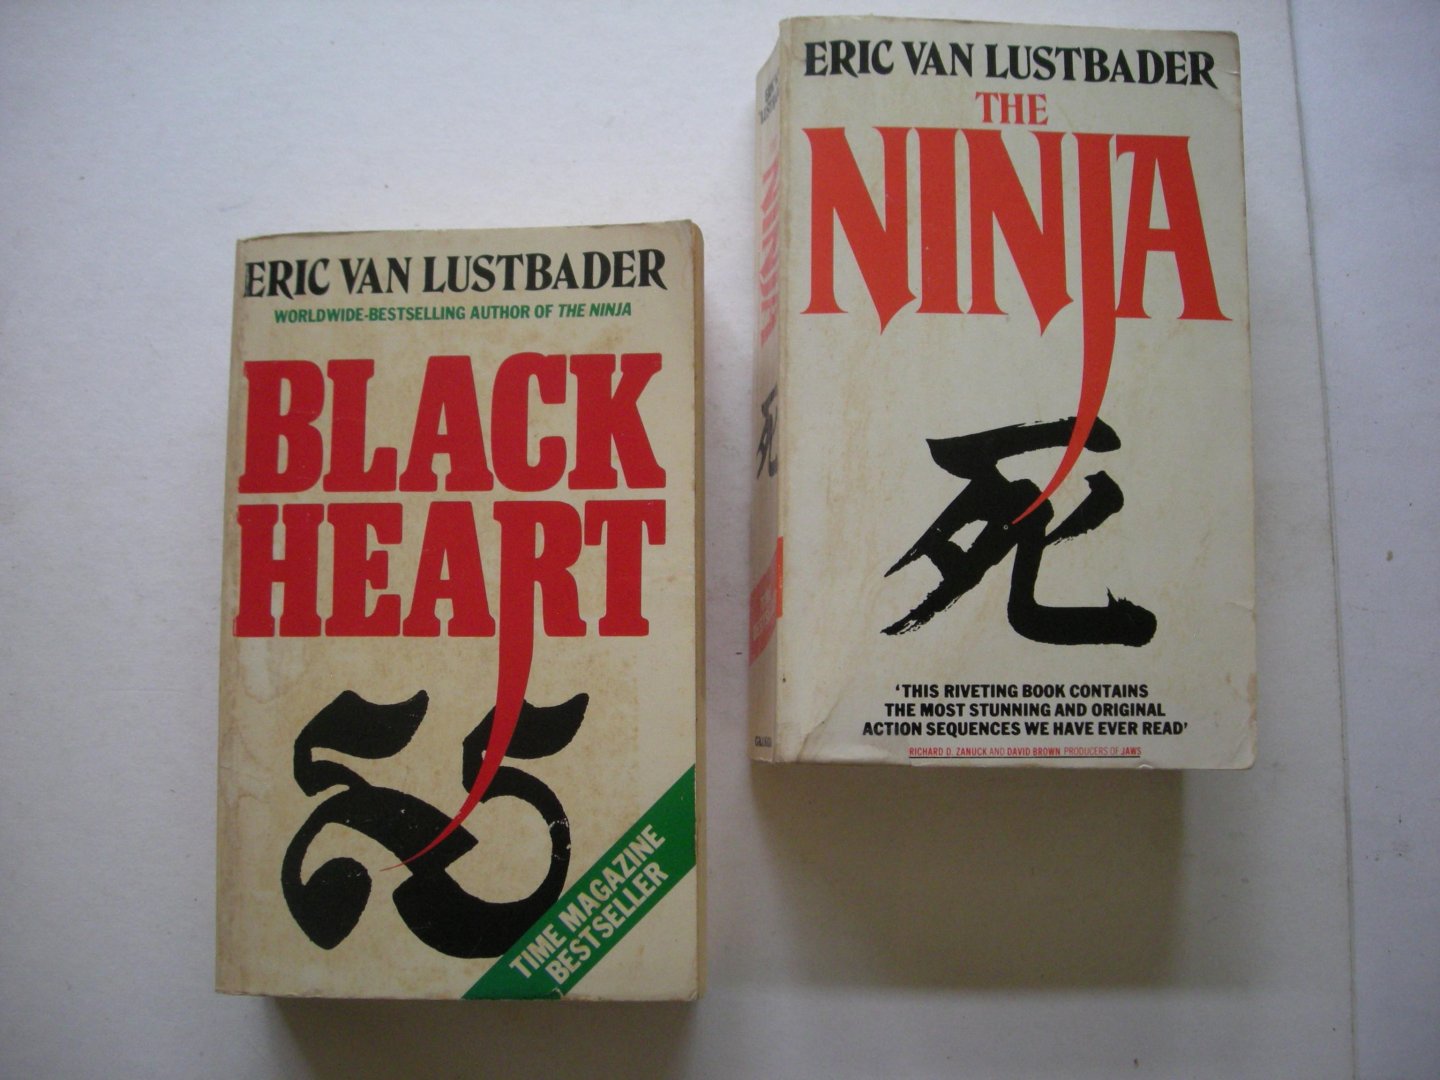 Lustbader, Eric van - Black Heart